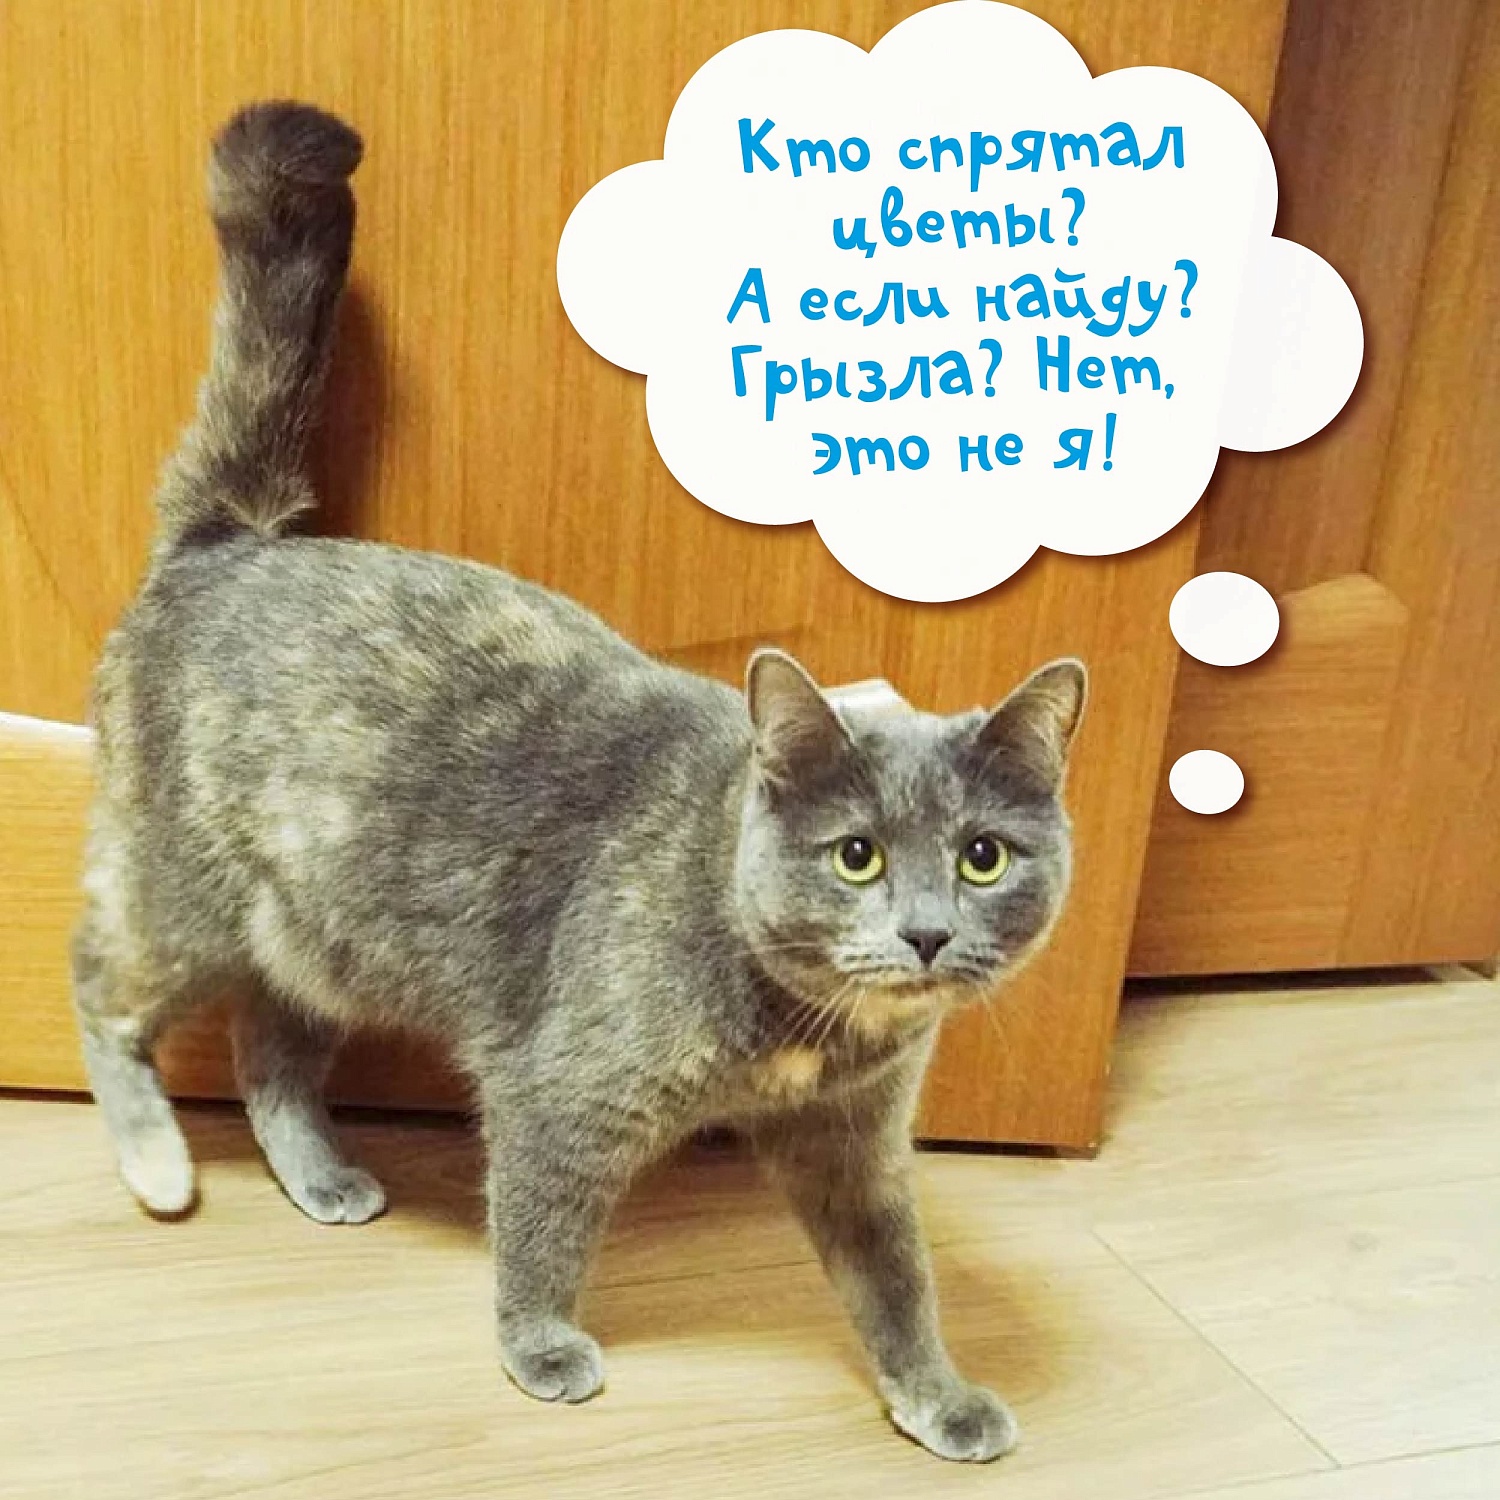  Знакомитесь - наша новая сотрудница корпоративный кото-психолог Мирослава!